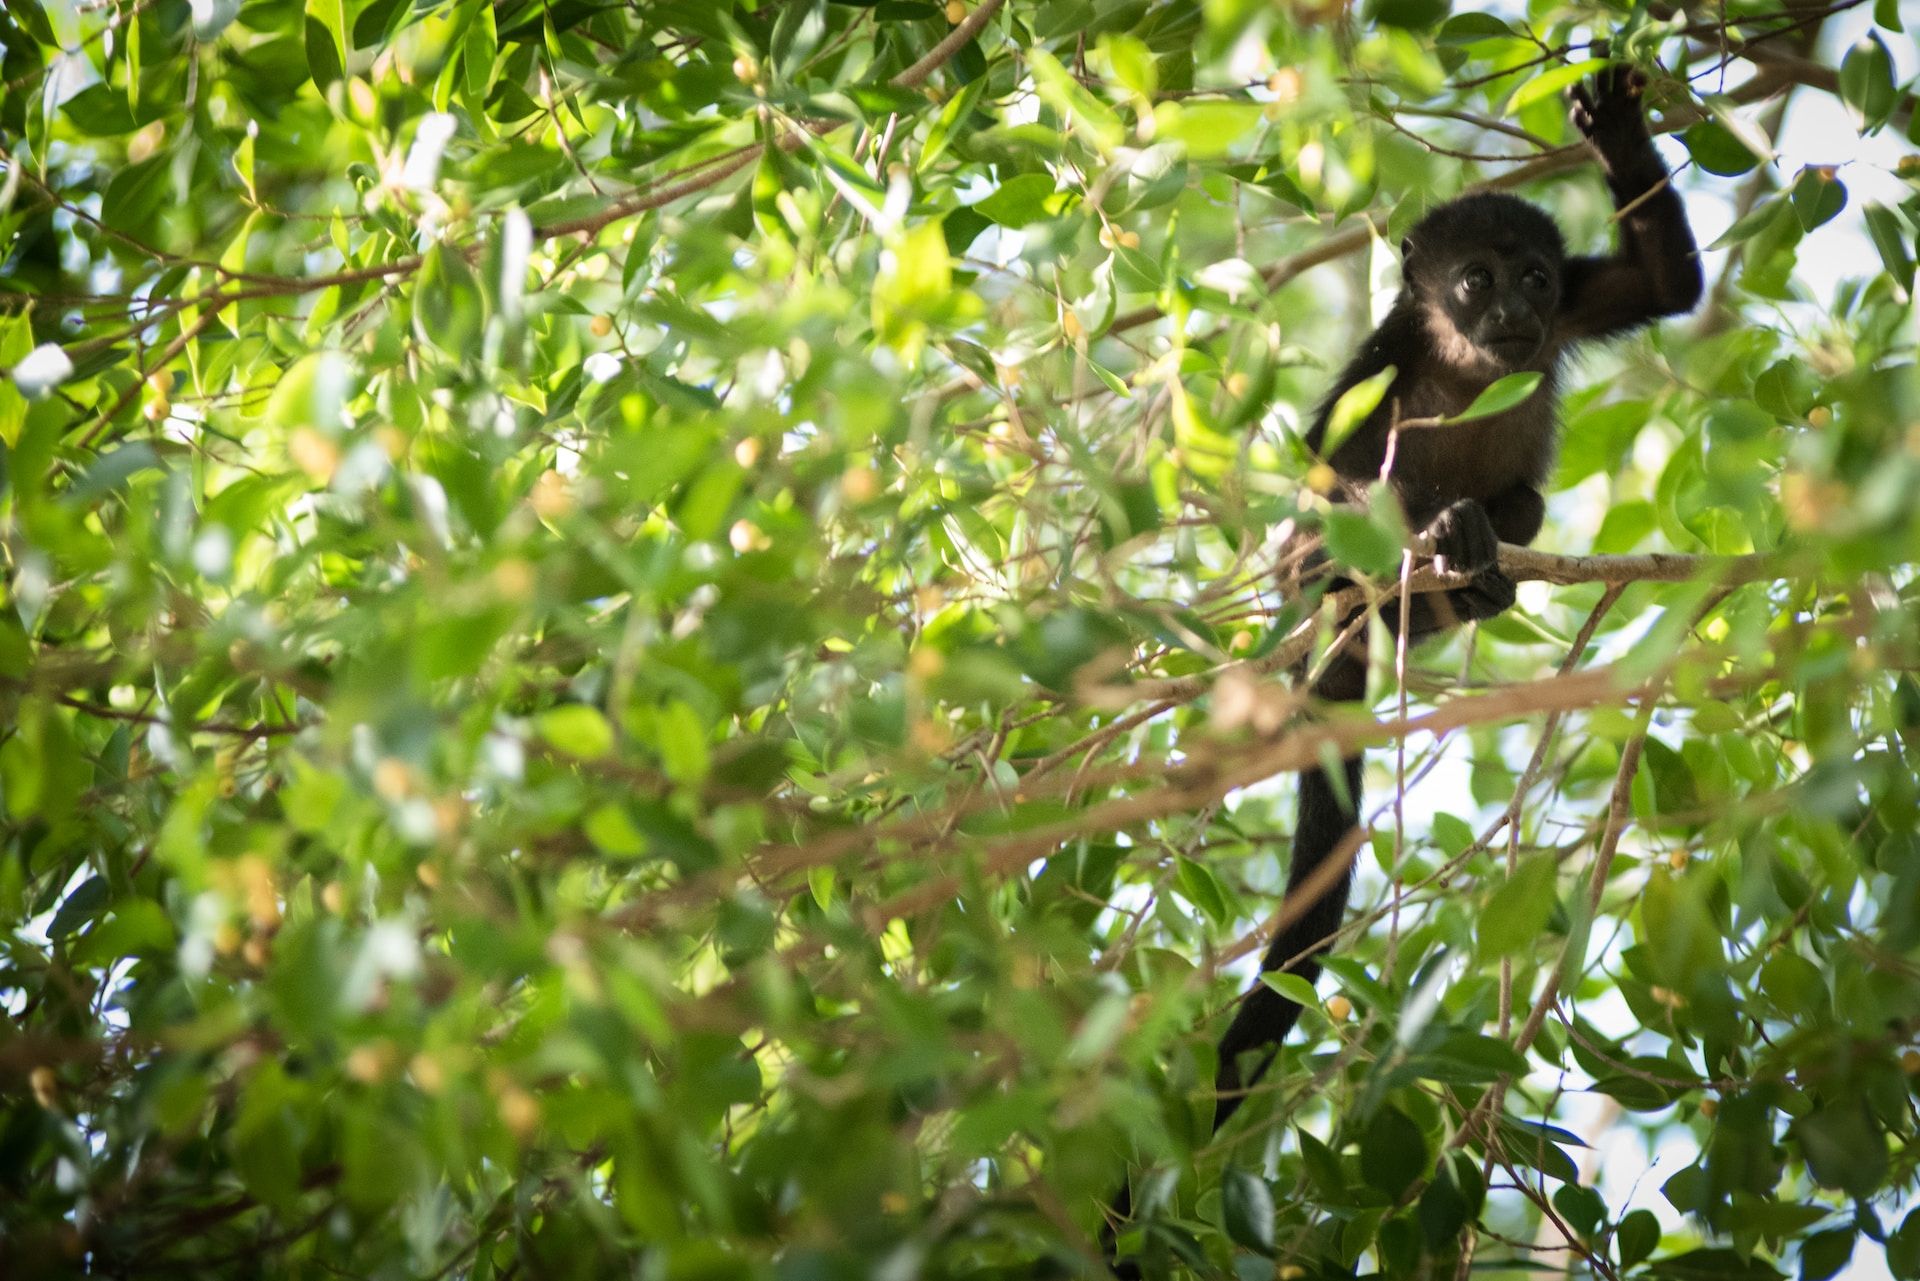 Monkey on a tree branch in Tamarindo, Costa Rica